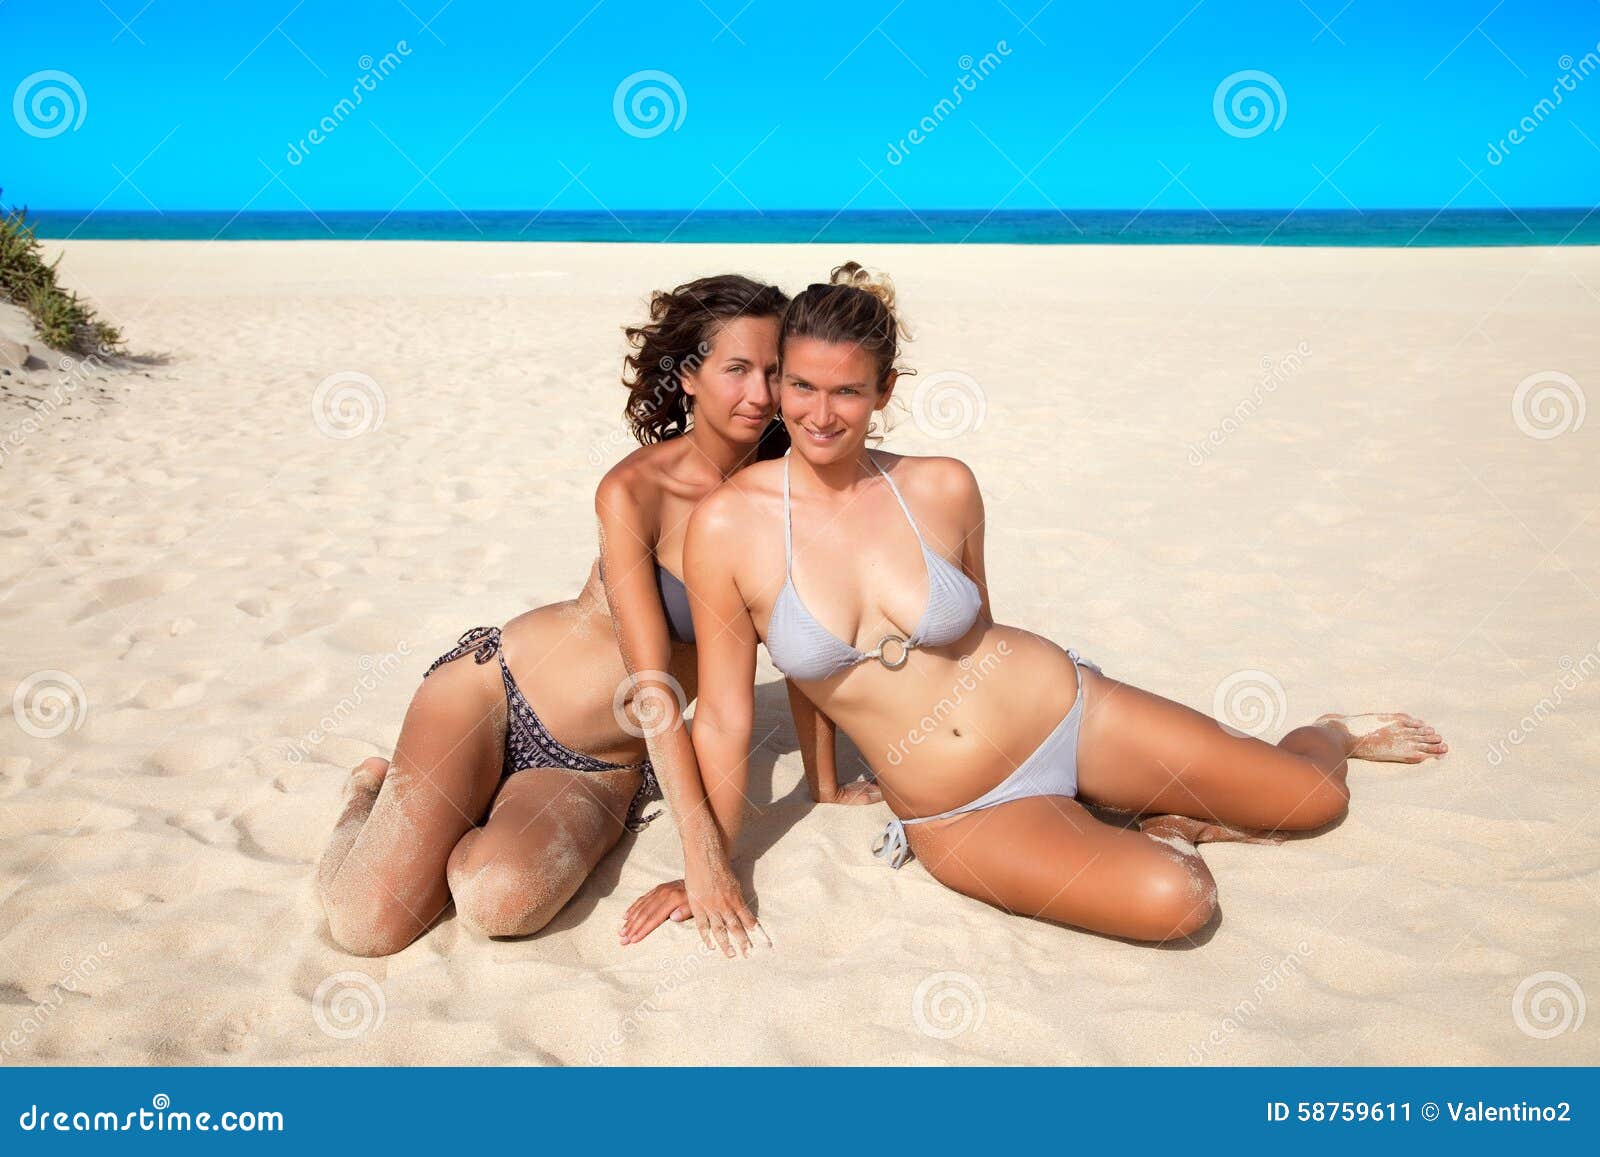 Schijn Portaal Gevoelig Women in bikini on a beach stock image. Image of vacation - 58759611